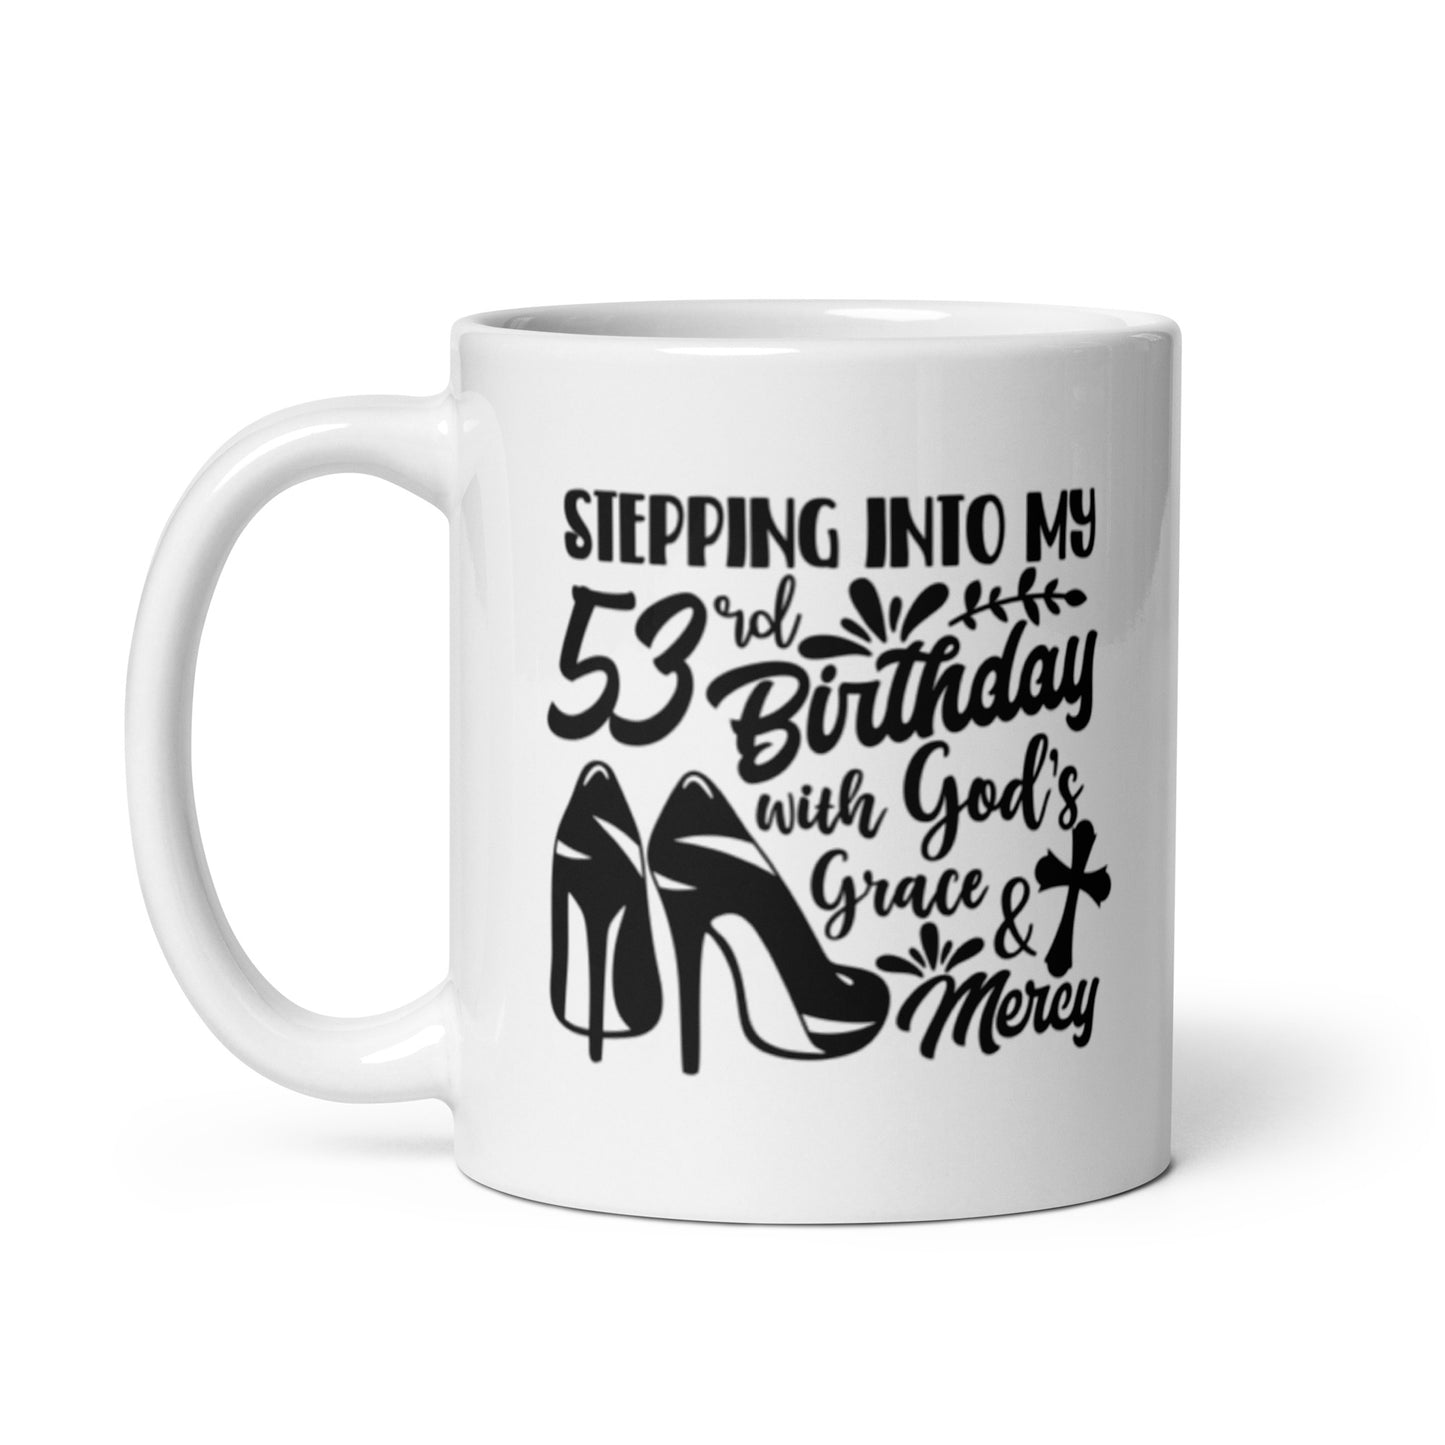 Stepping Into My 53rd Birthday with God's Grace & Mercy White Ceramic Mug